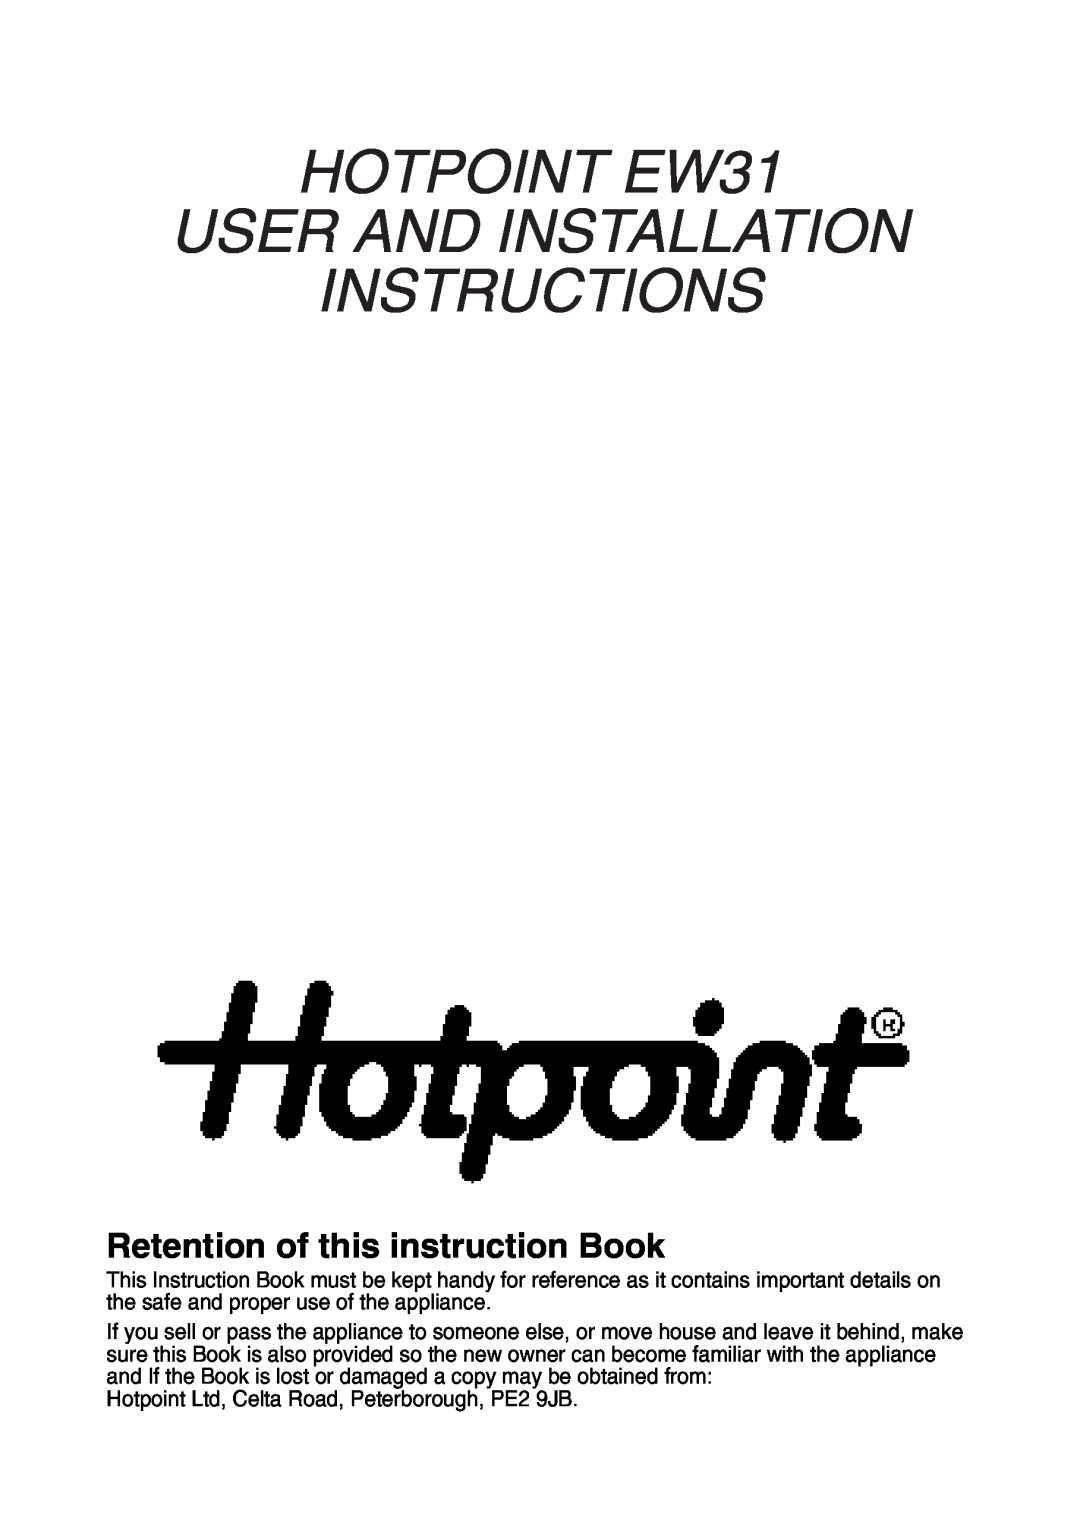 Hotpoint installation instructions HOTPOINT EW31 USER AND INSTALLATION INSTRUCTIONS, Retention of this instruction Book 